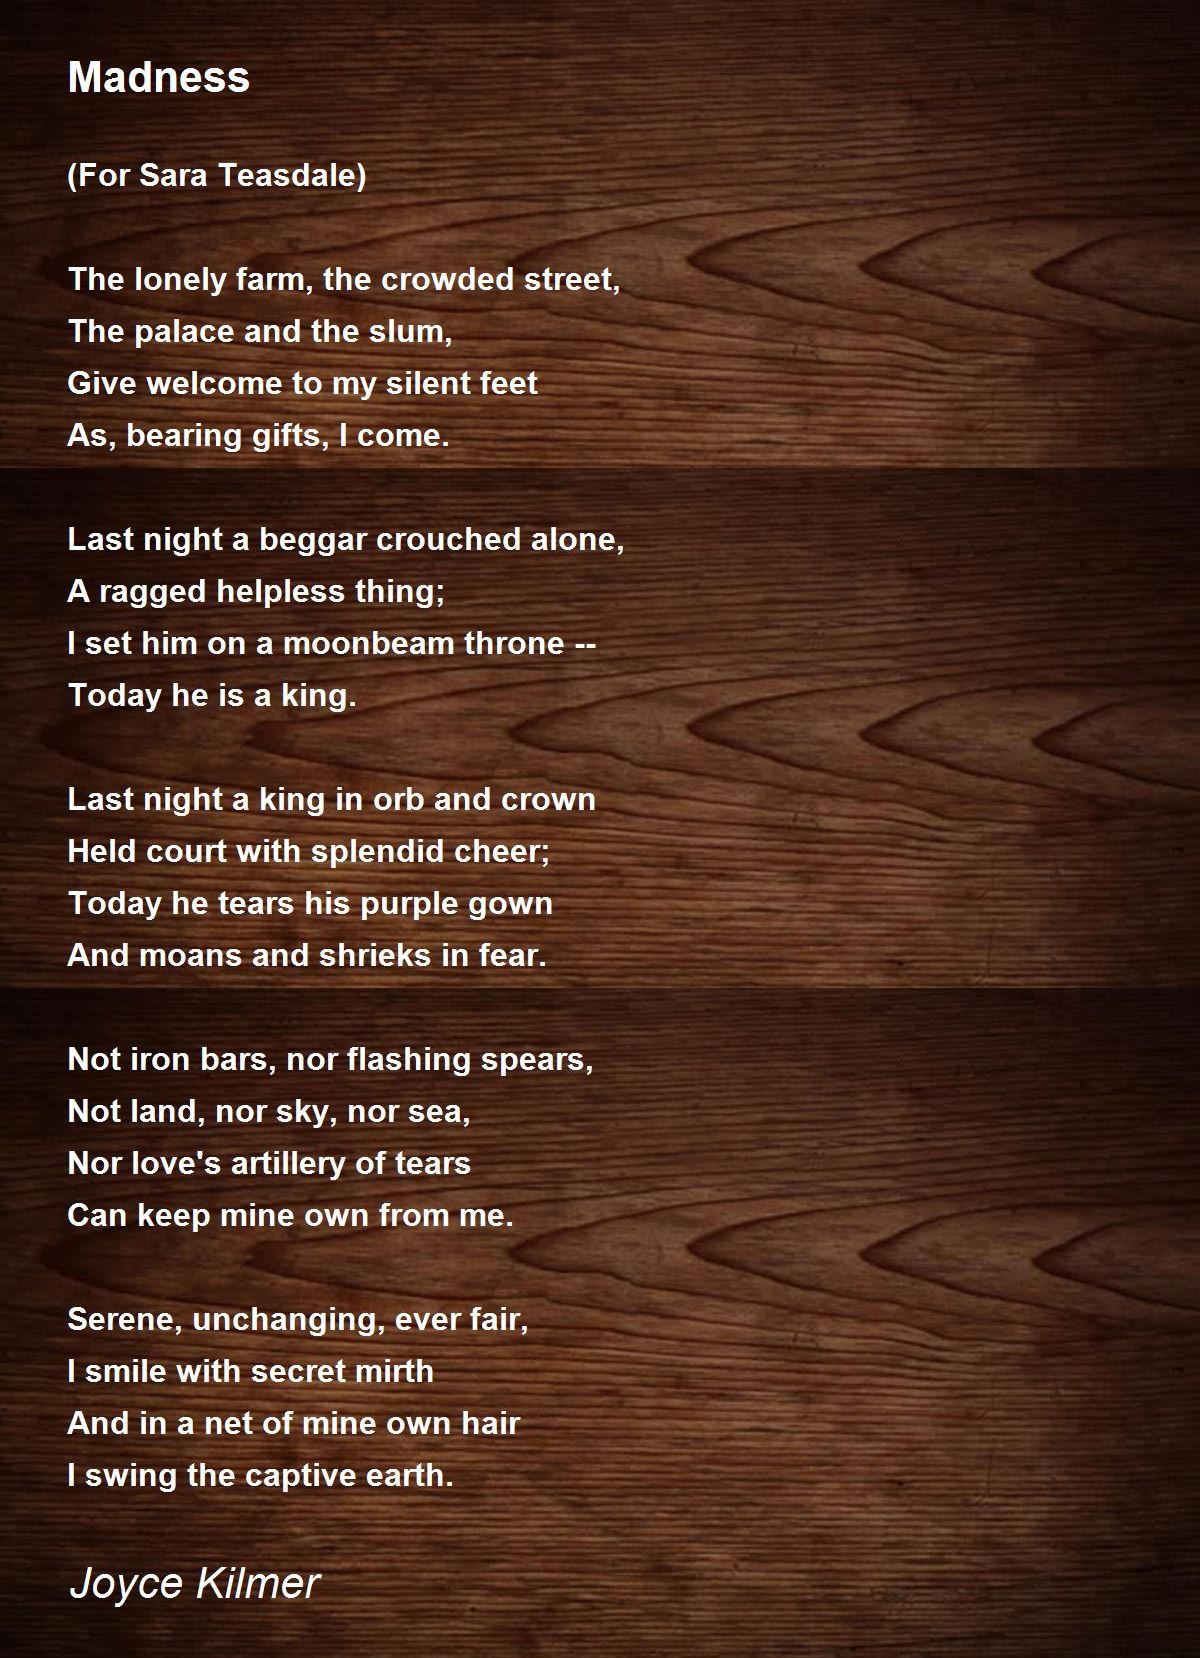 Madness Poem by Joyce Kilmer - Poem Hunter